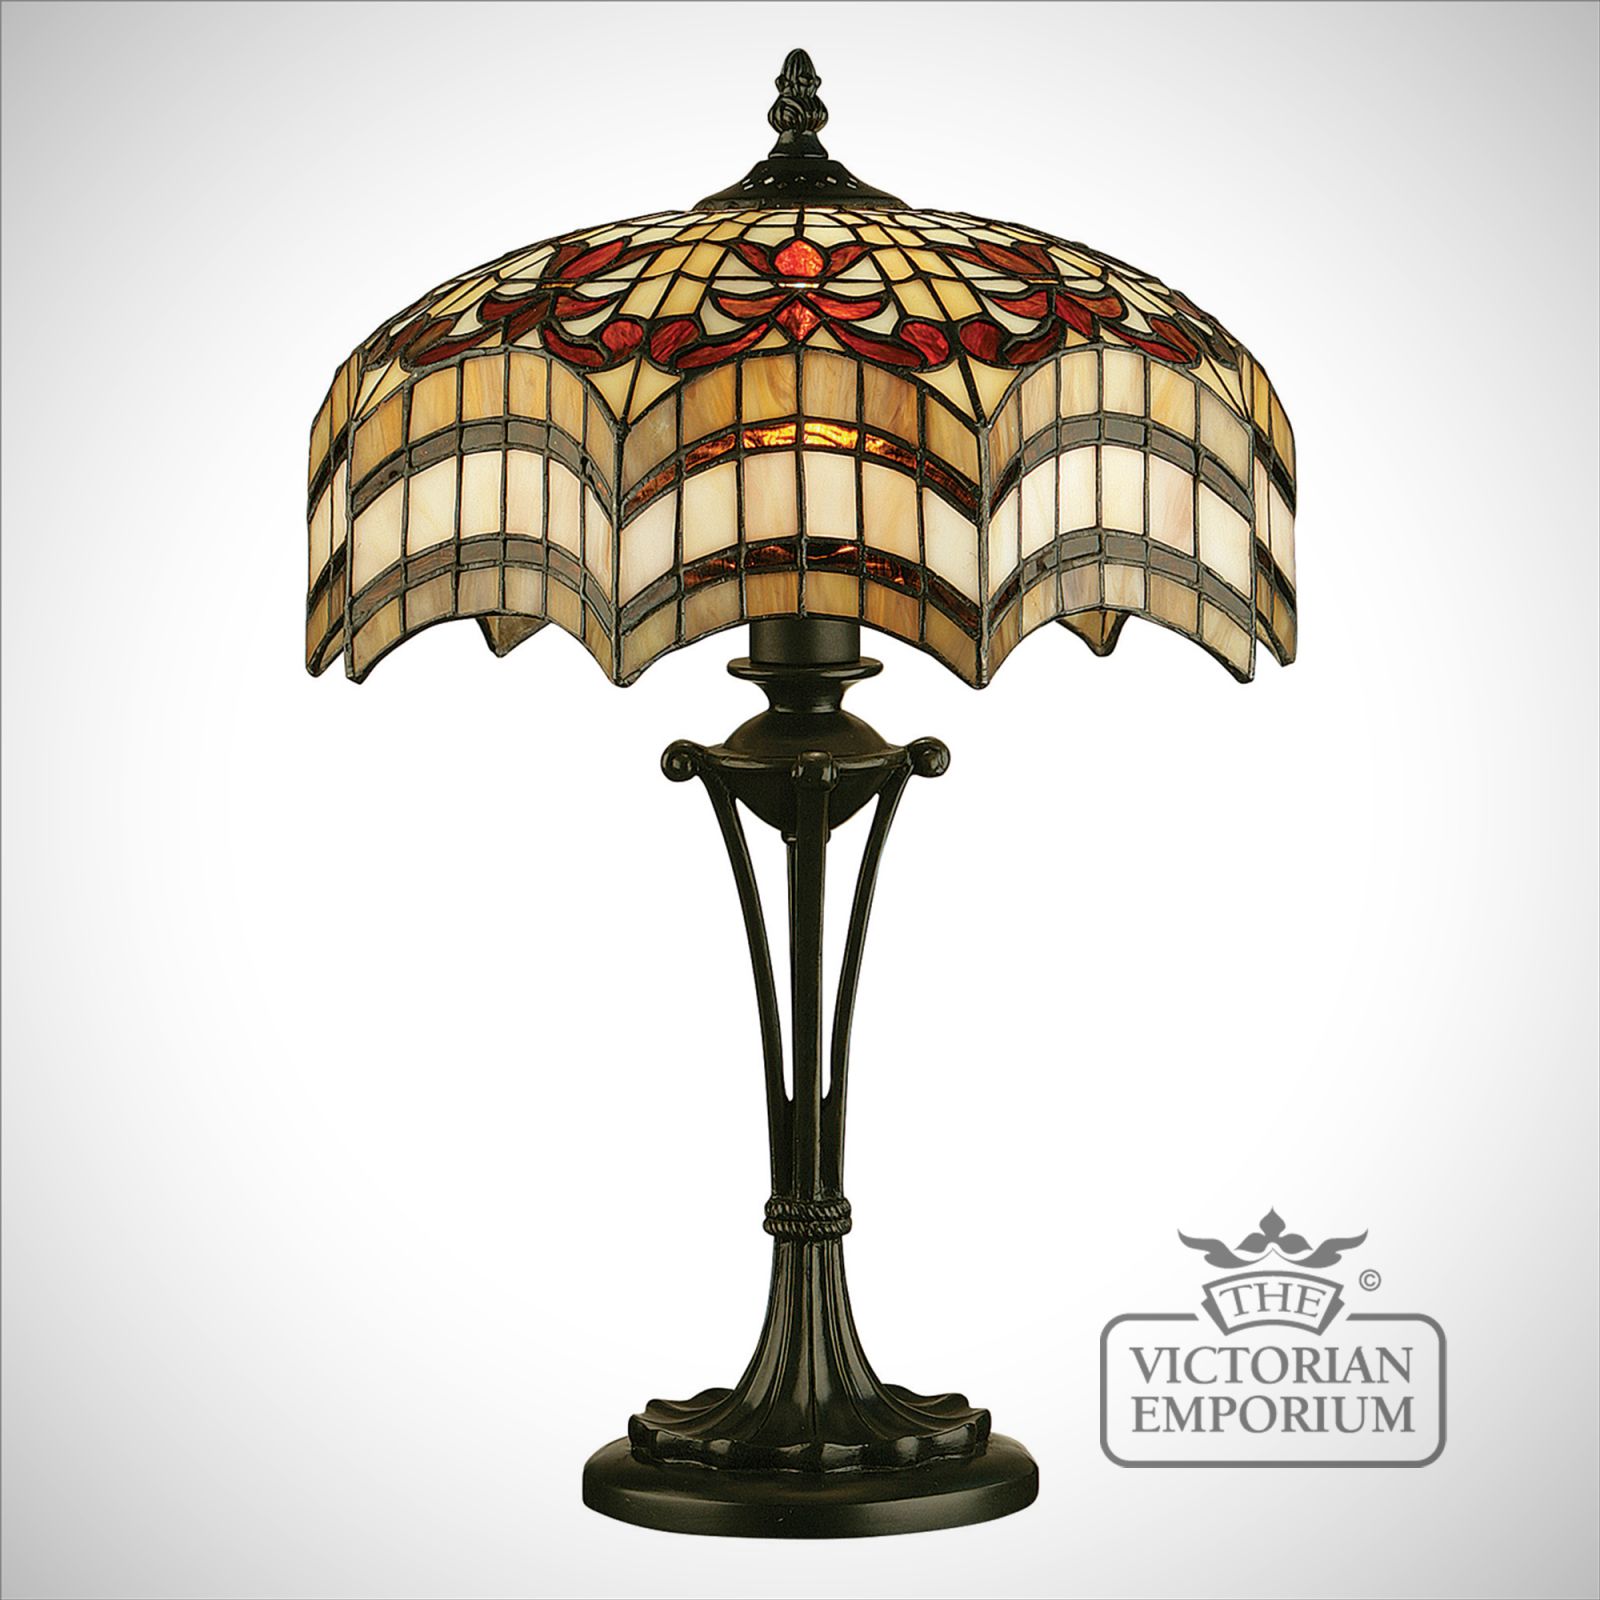 Vesta table lamp - small or medium